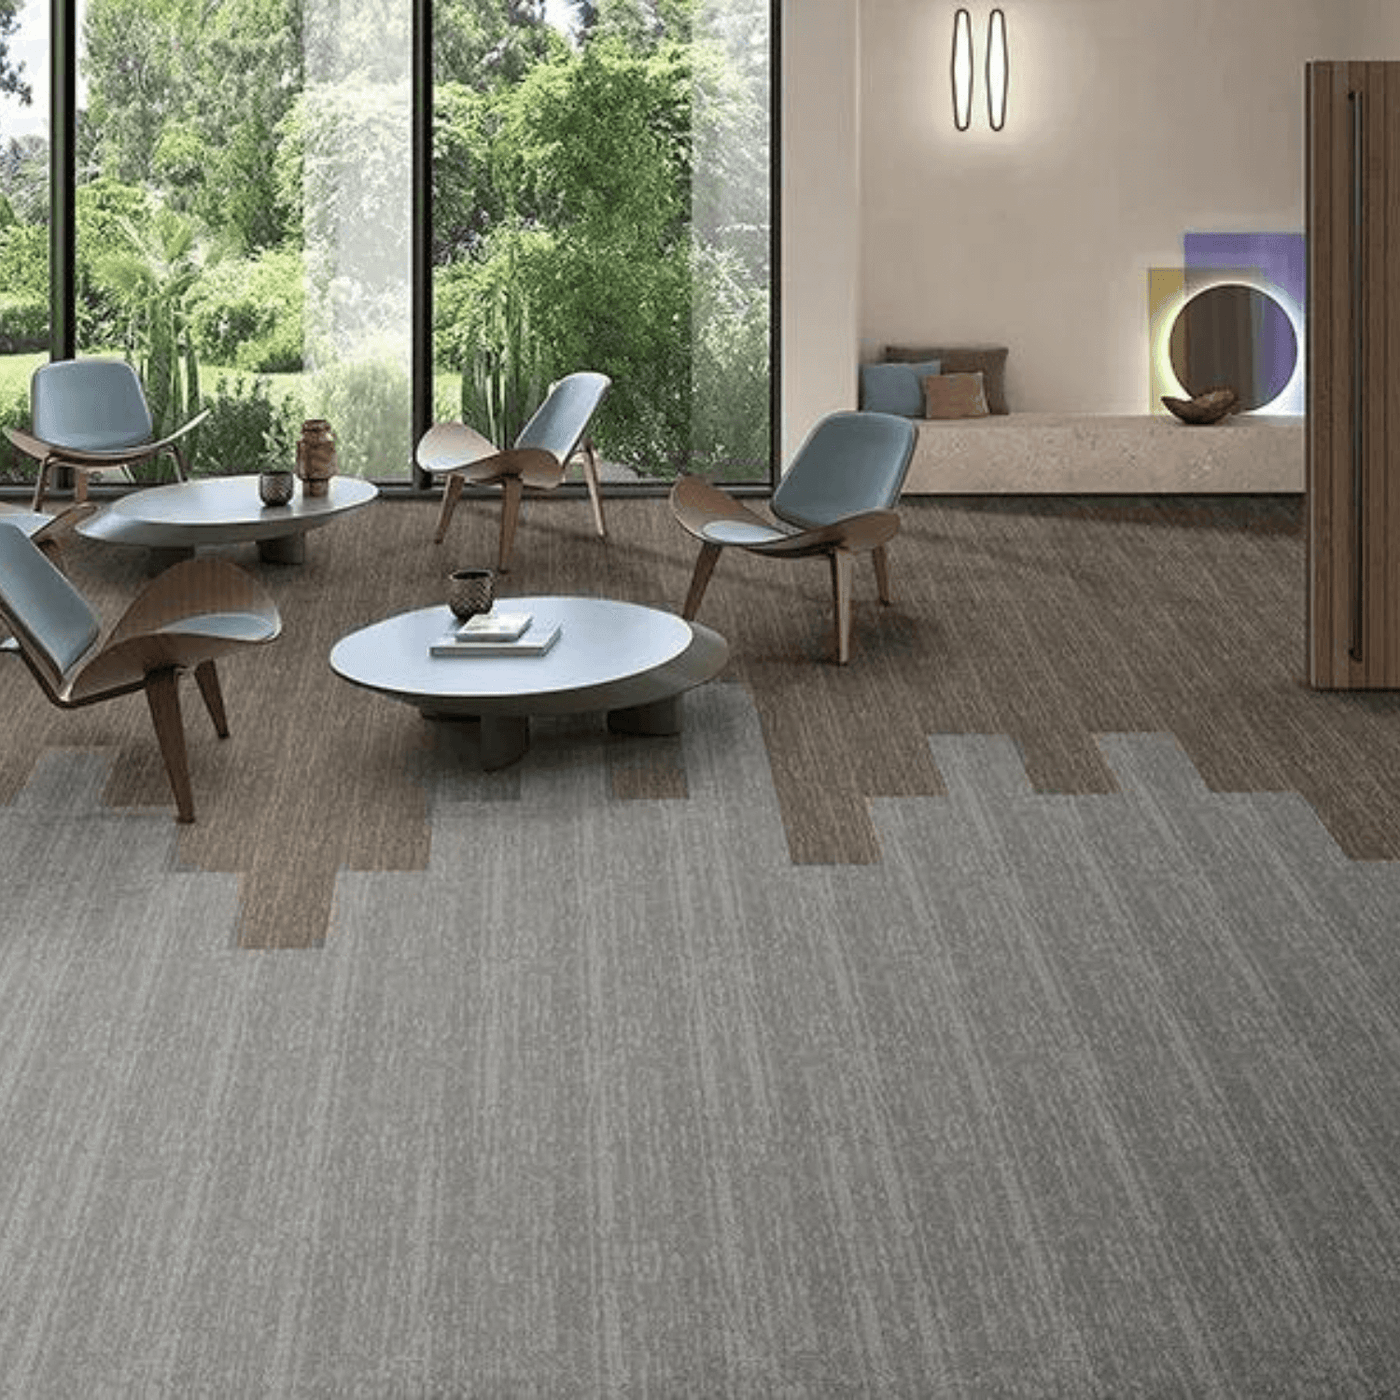 Harvest - Innovflor Carpet Tiles